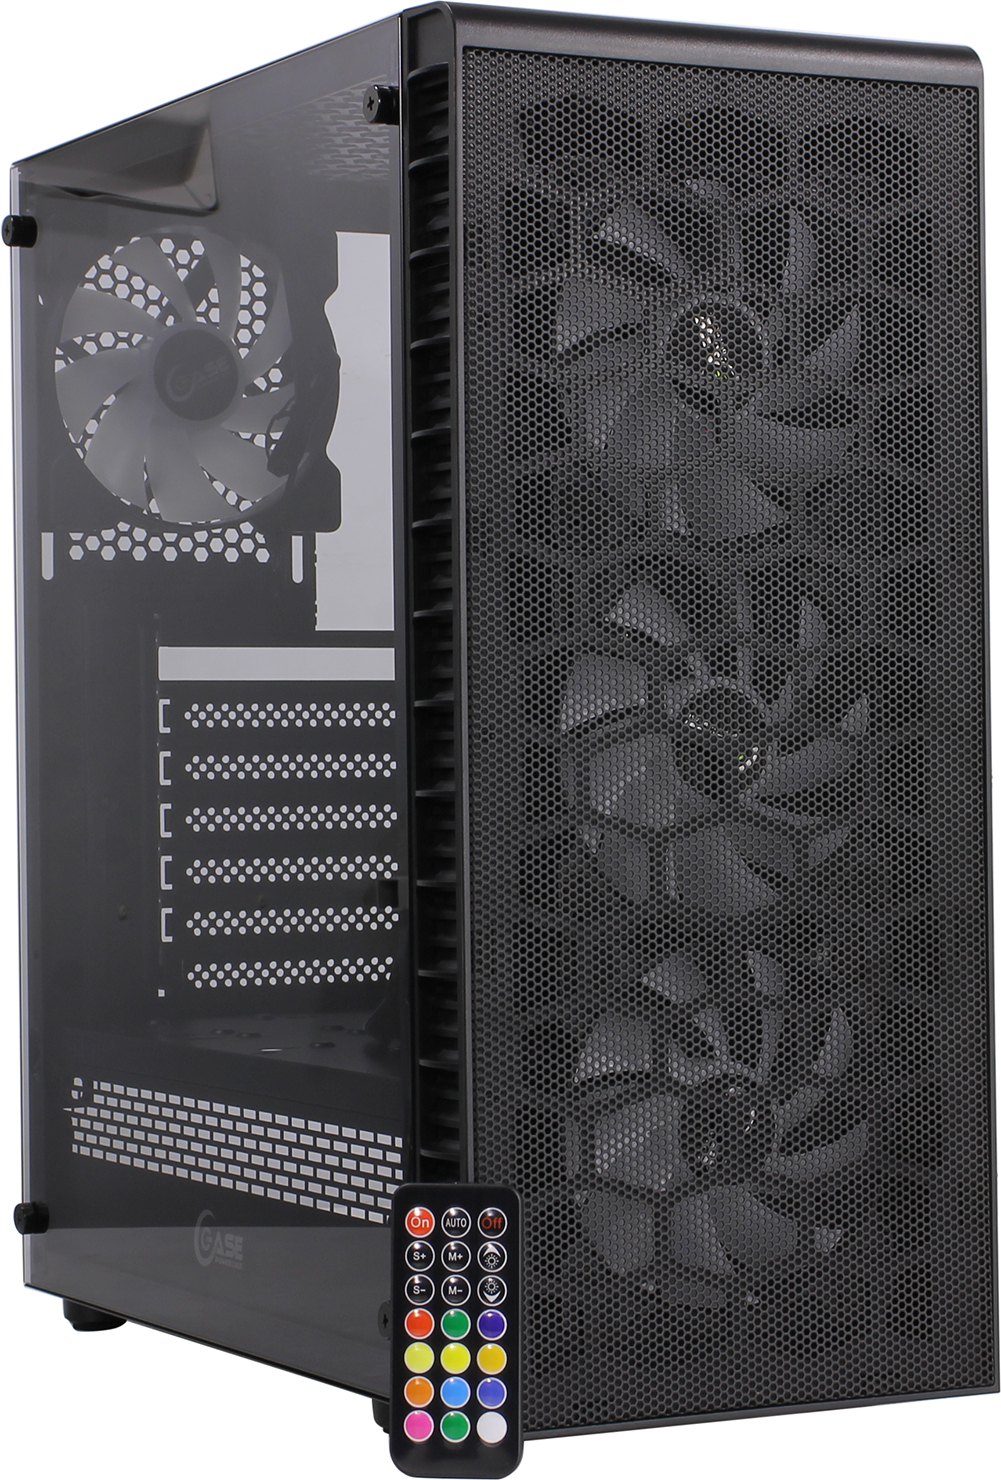 Корпус Powercase Mistral Z4С Mesh ARGB, Tempered Glass, 4x 120mm ARGB fan, fans controller & remote, чёрный, ATX  (CMIZ4C-A4)